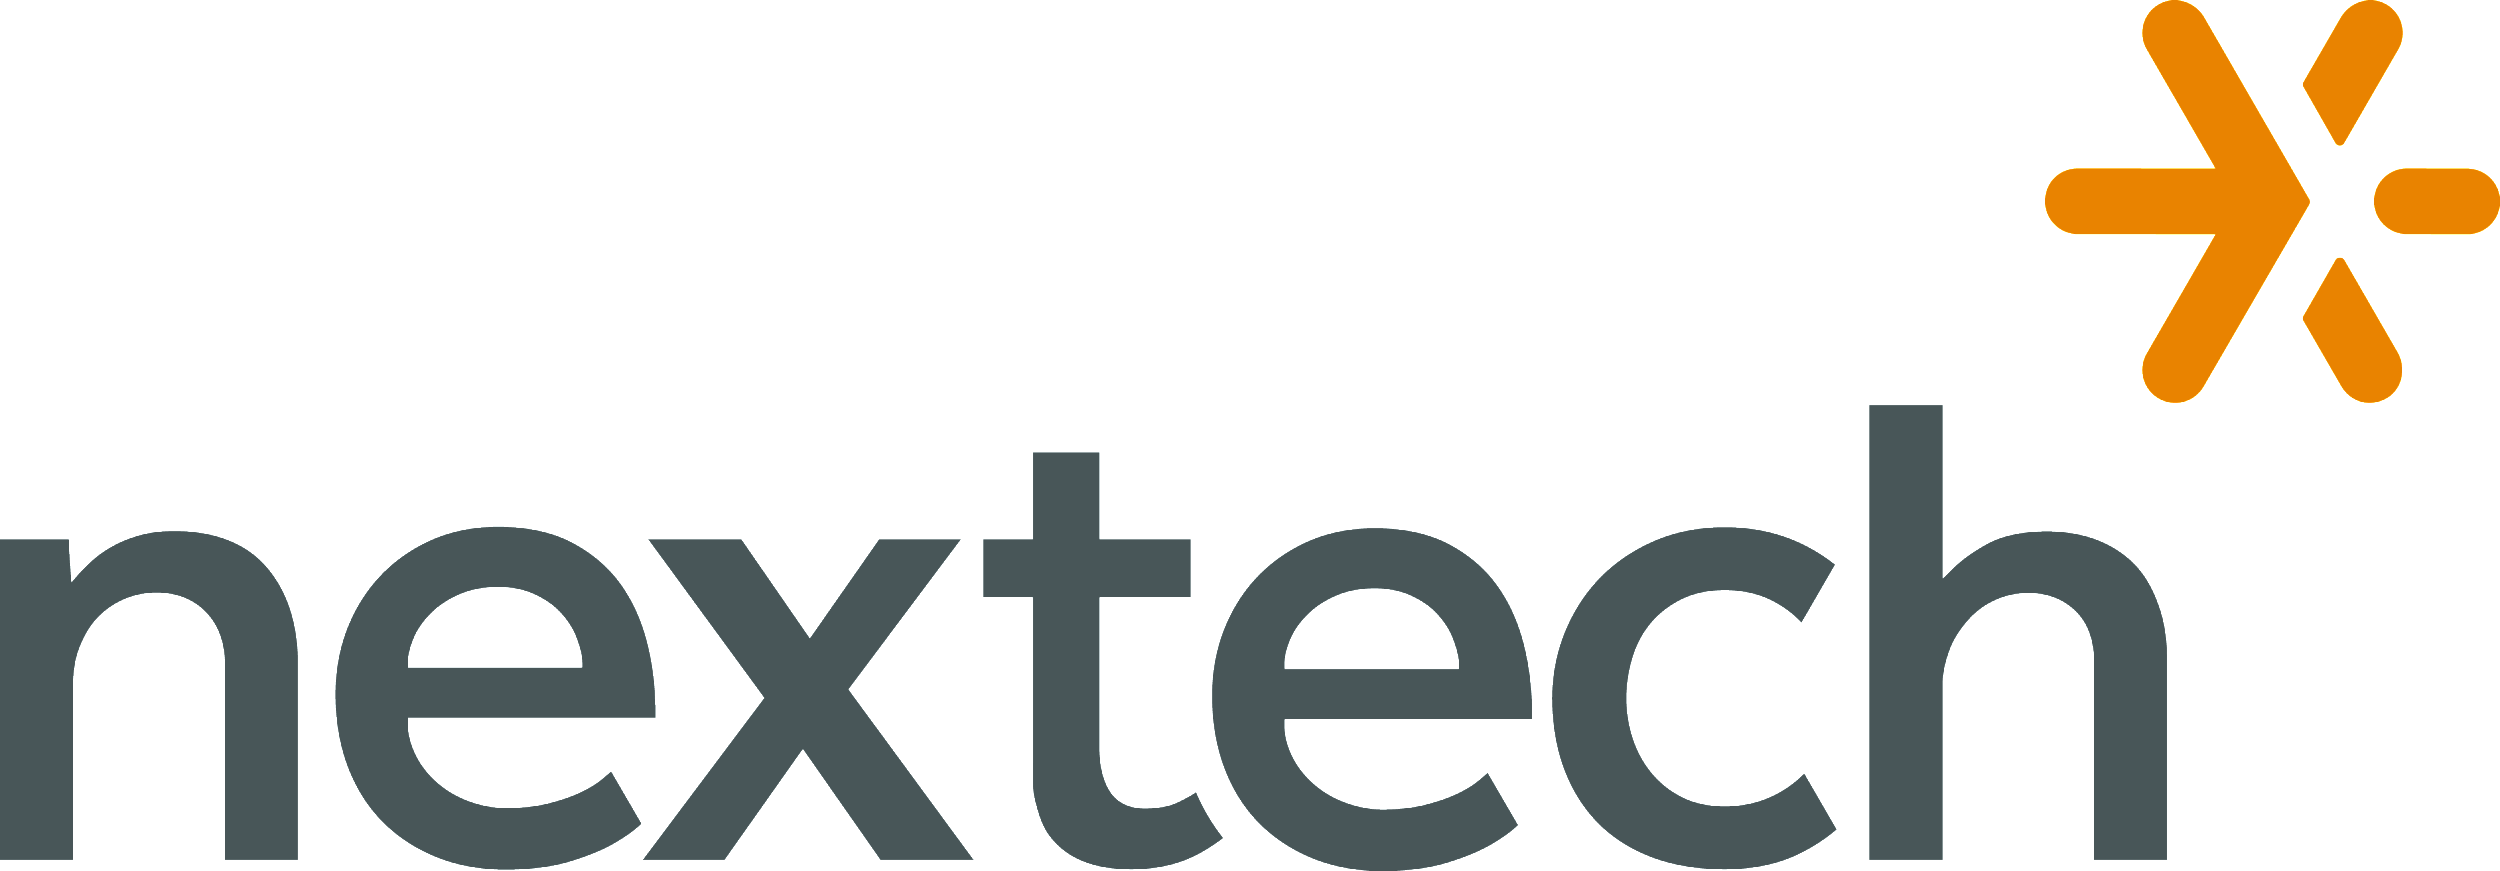 Nextech Logo